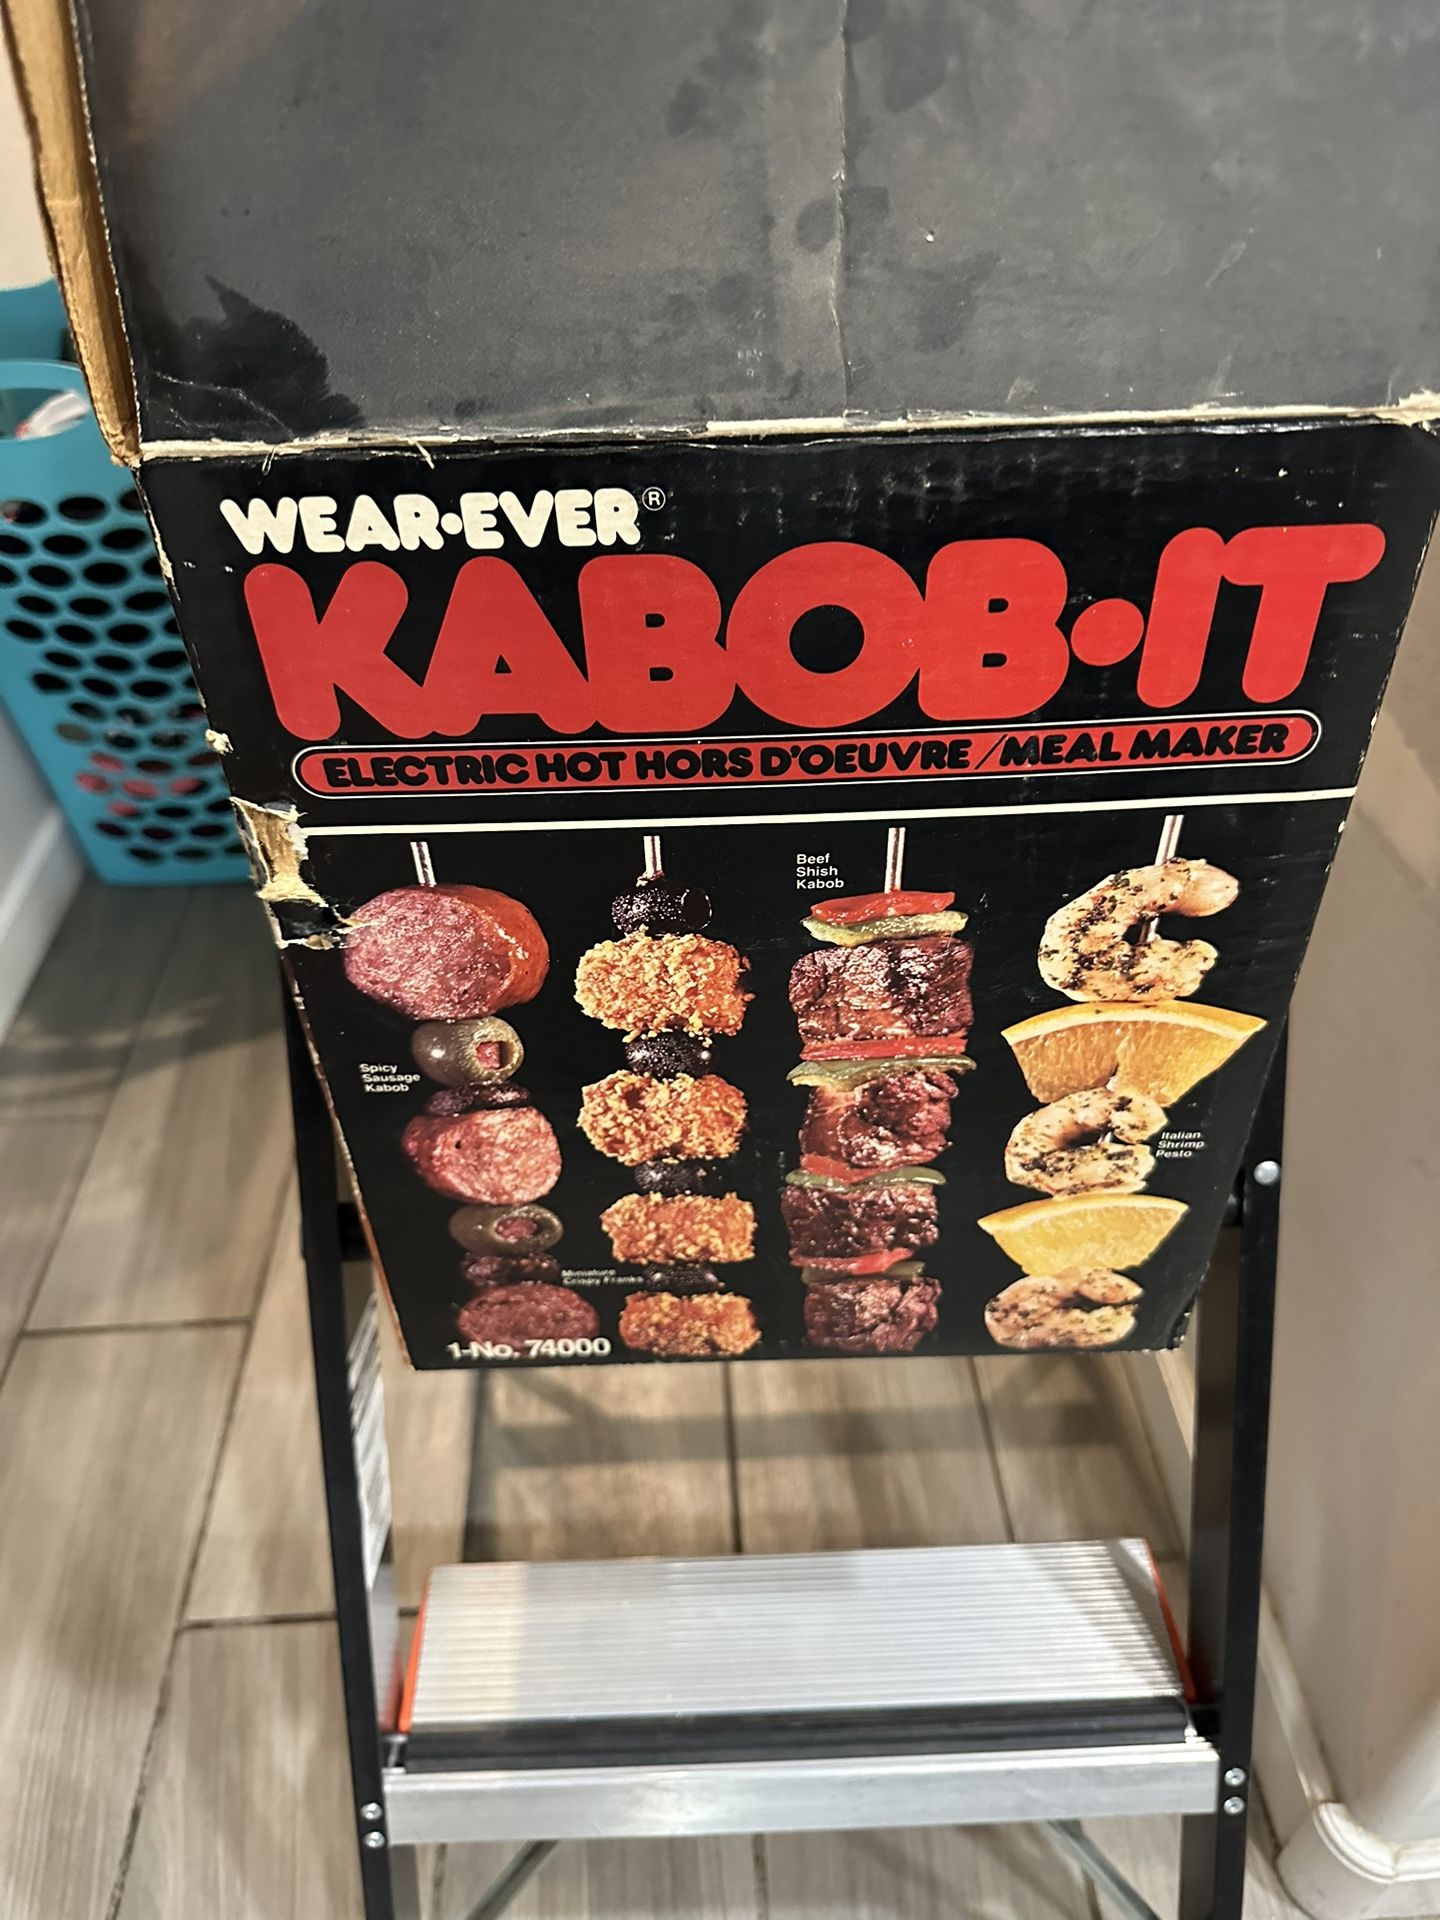 Kabob-it 